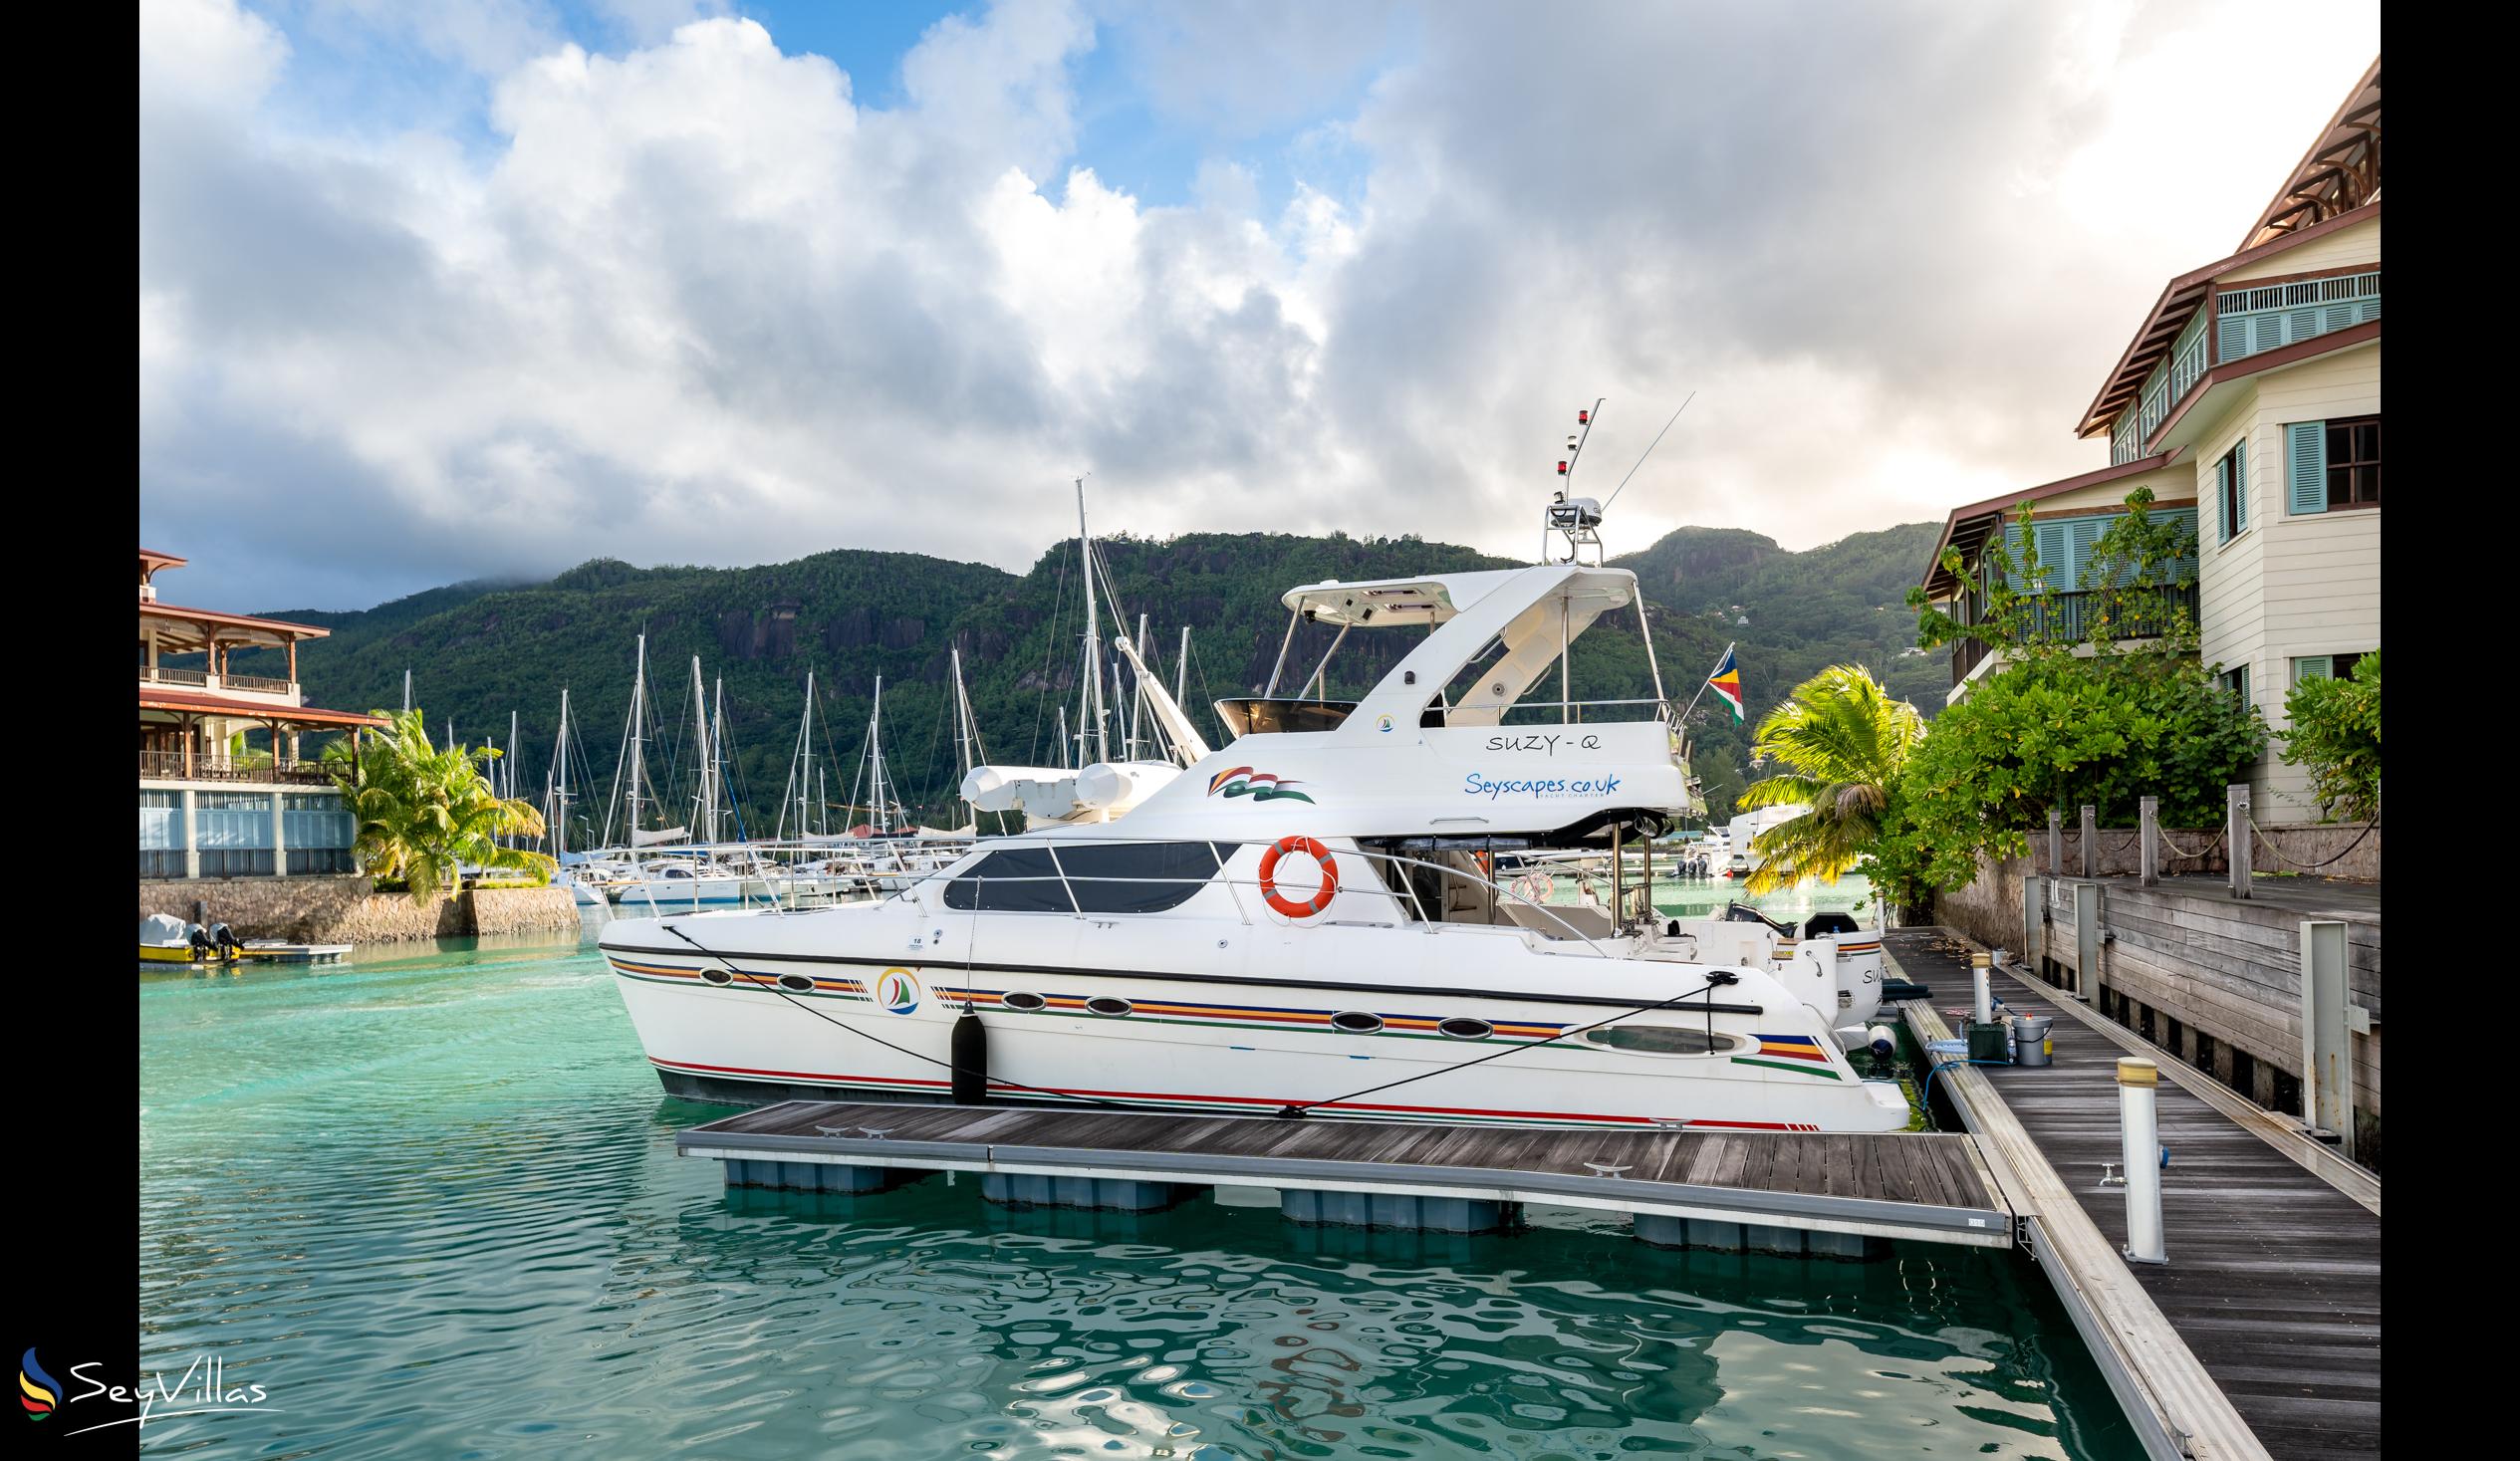 Photo 57: Seyscapes Yacht Charter - Full charter Suzy Q - Seychelles (Seychelles)